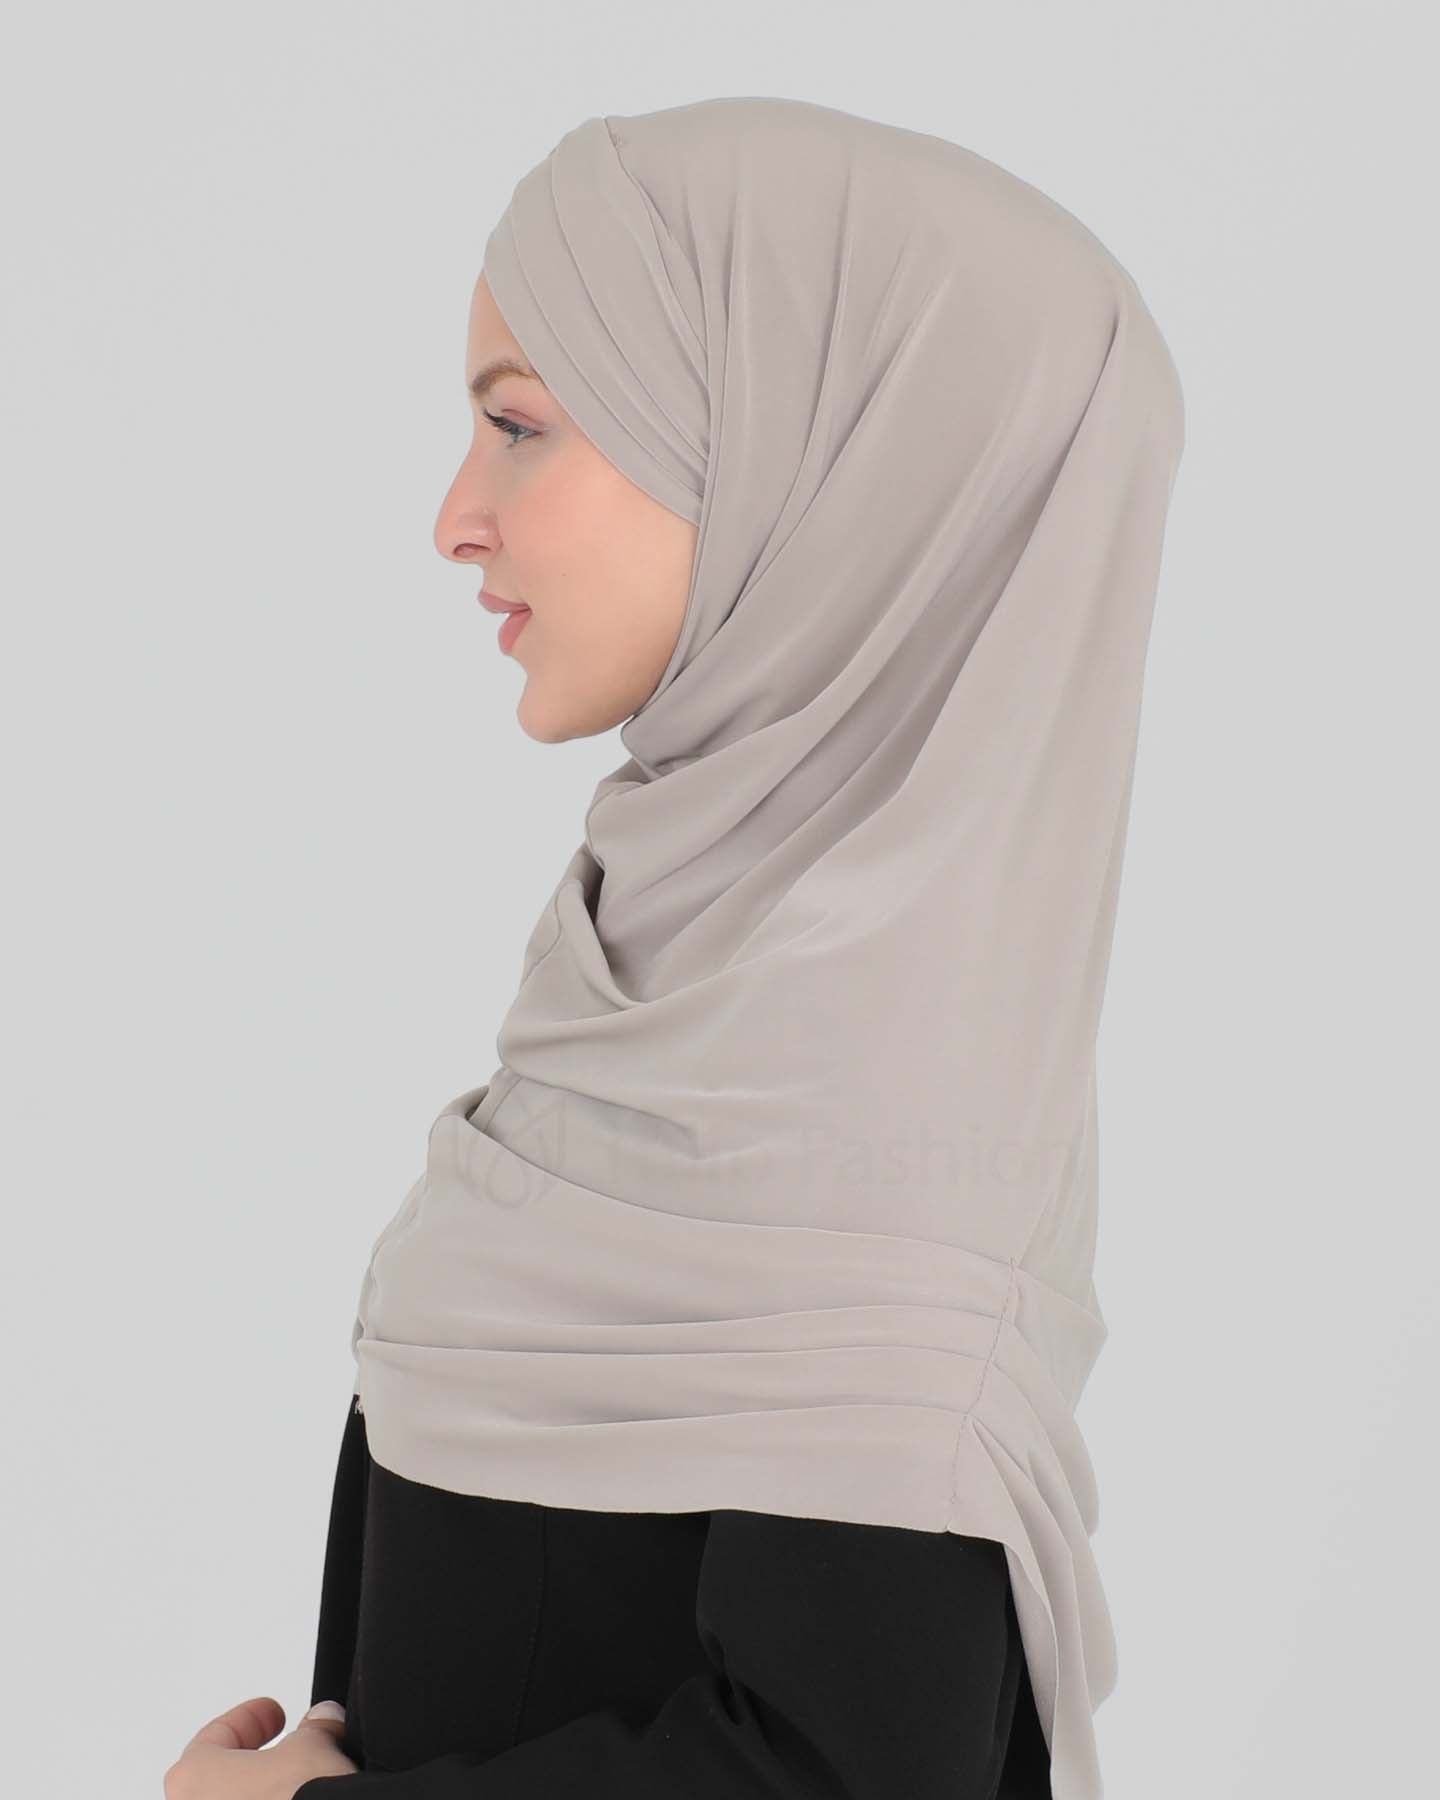 Hijab - Al Amira cross with cap - Taupe